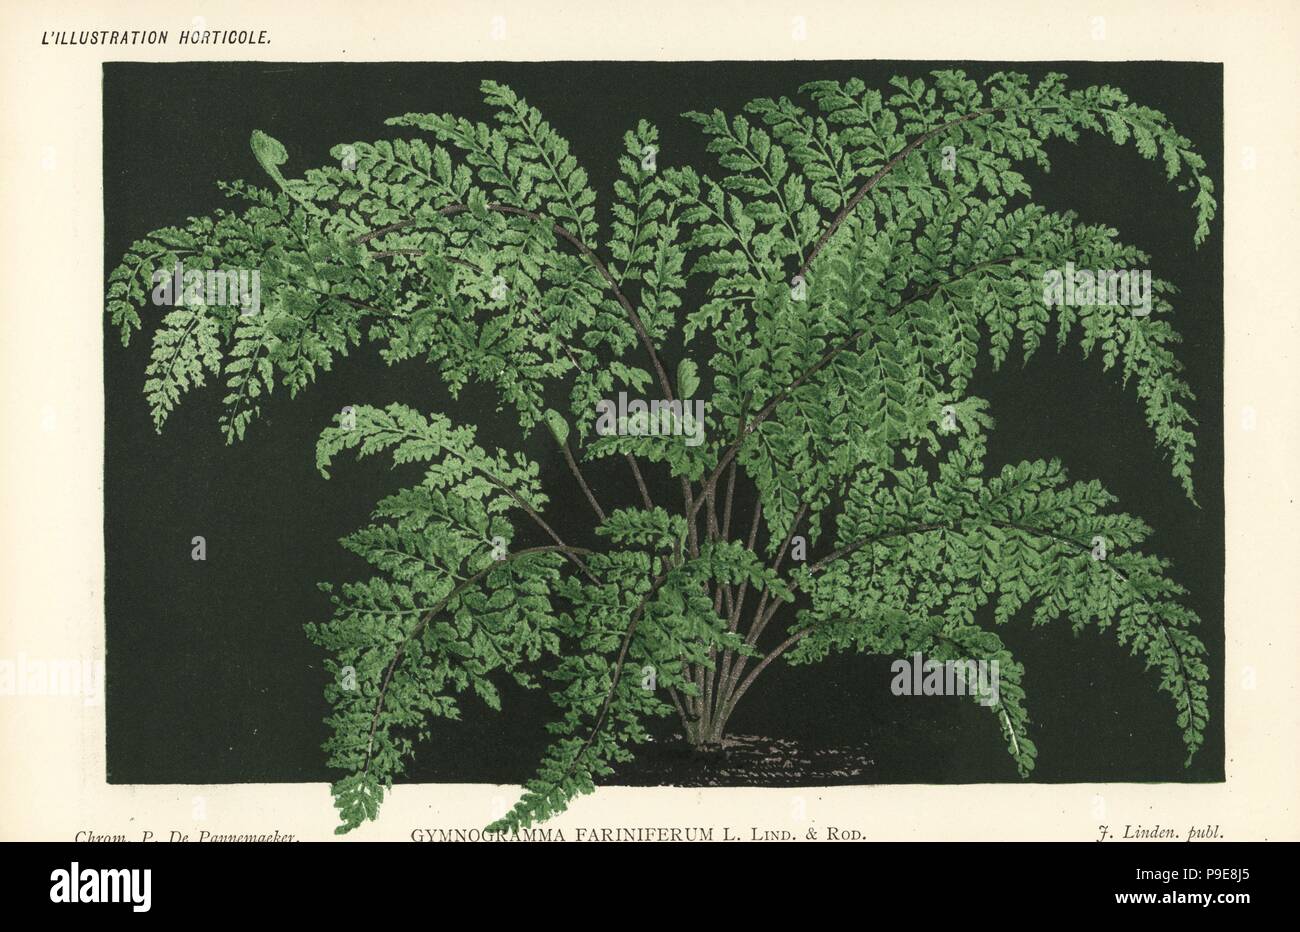 Unresolved fern species, Gymnogramma farinifera. Chromolithograph by Pieter de Pannemaeker from Jean Linden's l'Illustration Horticole, Brussels, 1885. Stock Photo